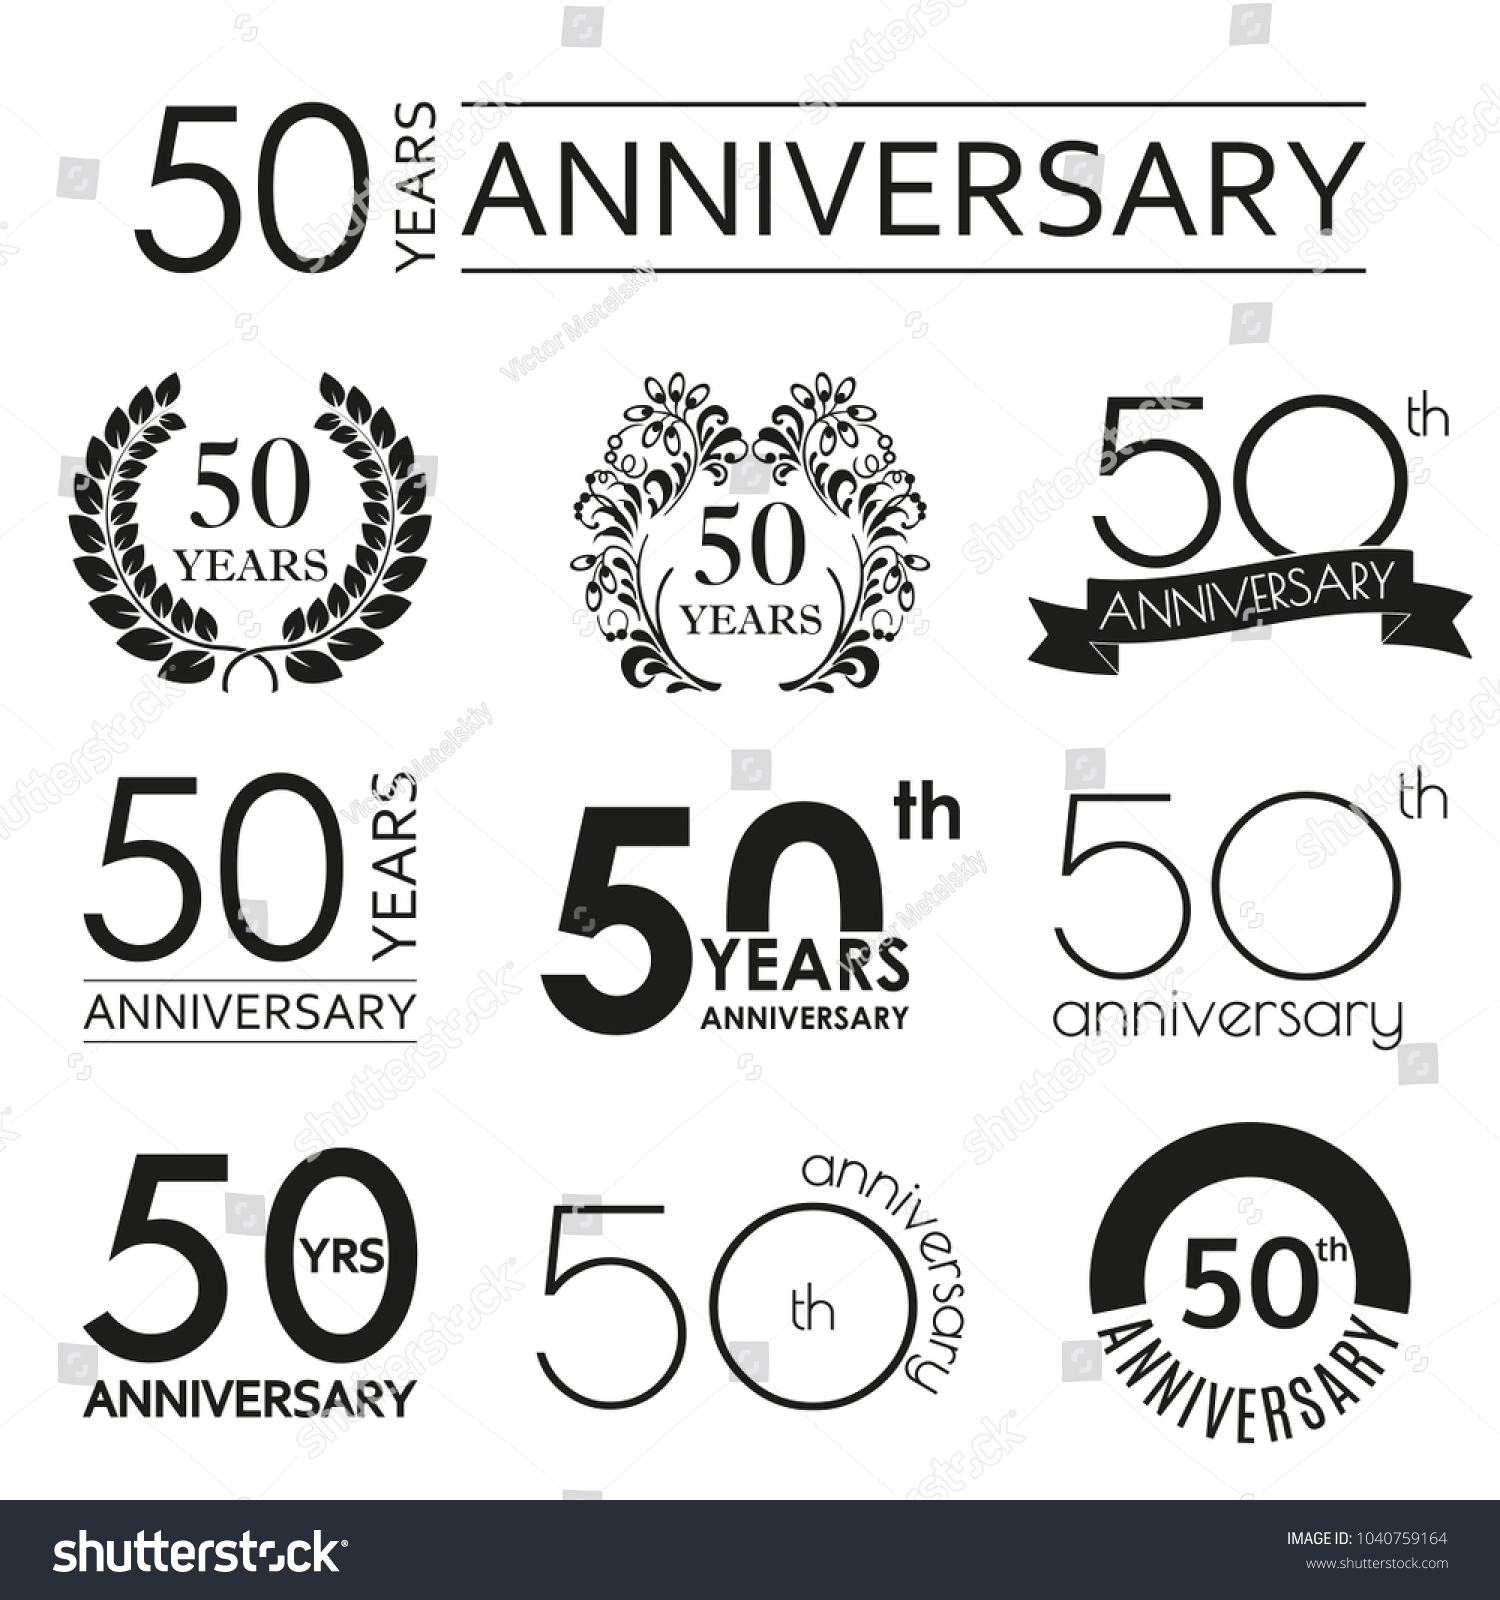 SVG of 50 years anniversary icon set. 50th anniversary celebration logo. Design elements for birthday, invitation, wedding jubilee. Vector illustration. svg